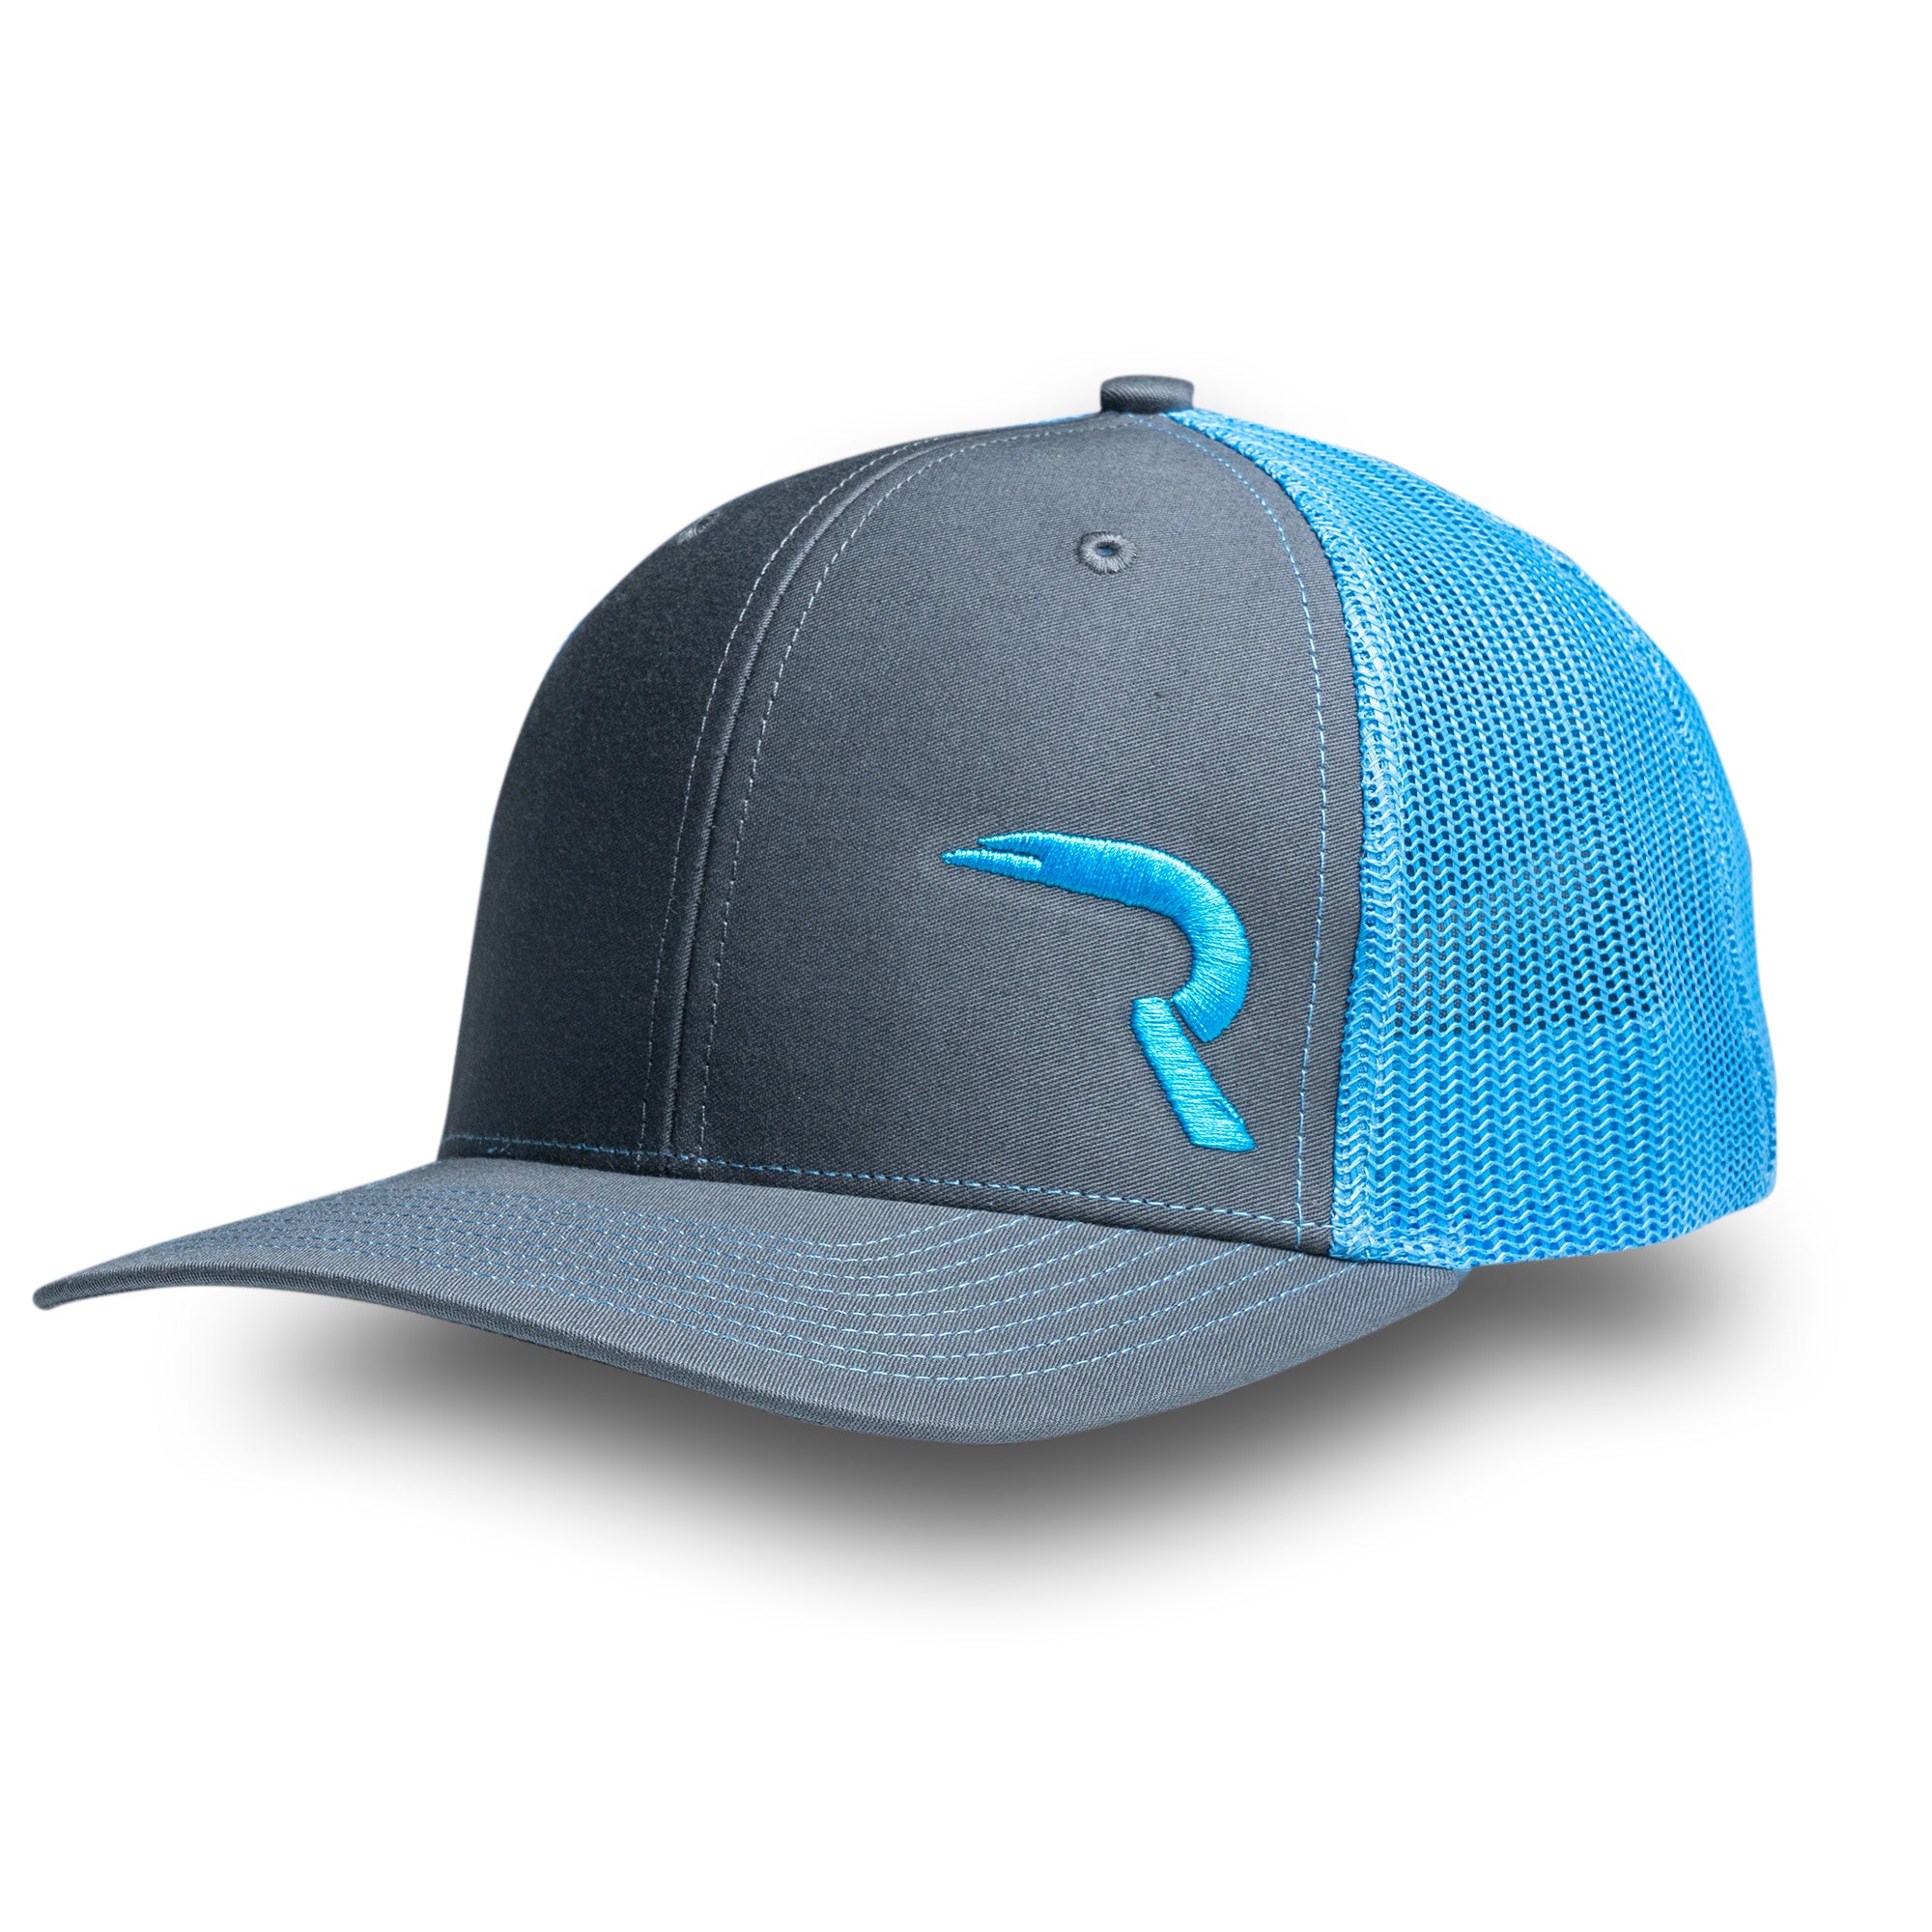 RECON "R" Trucker Snapback Hat - Gray/Teal